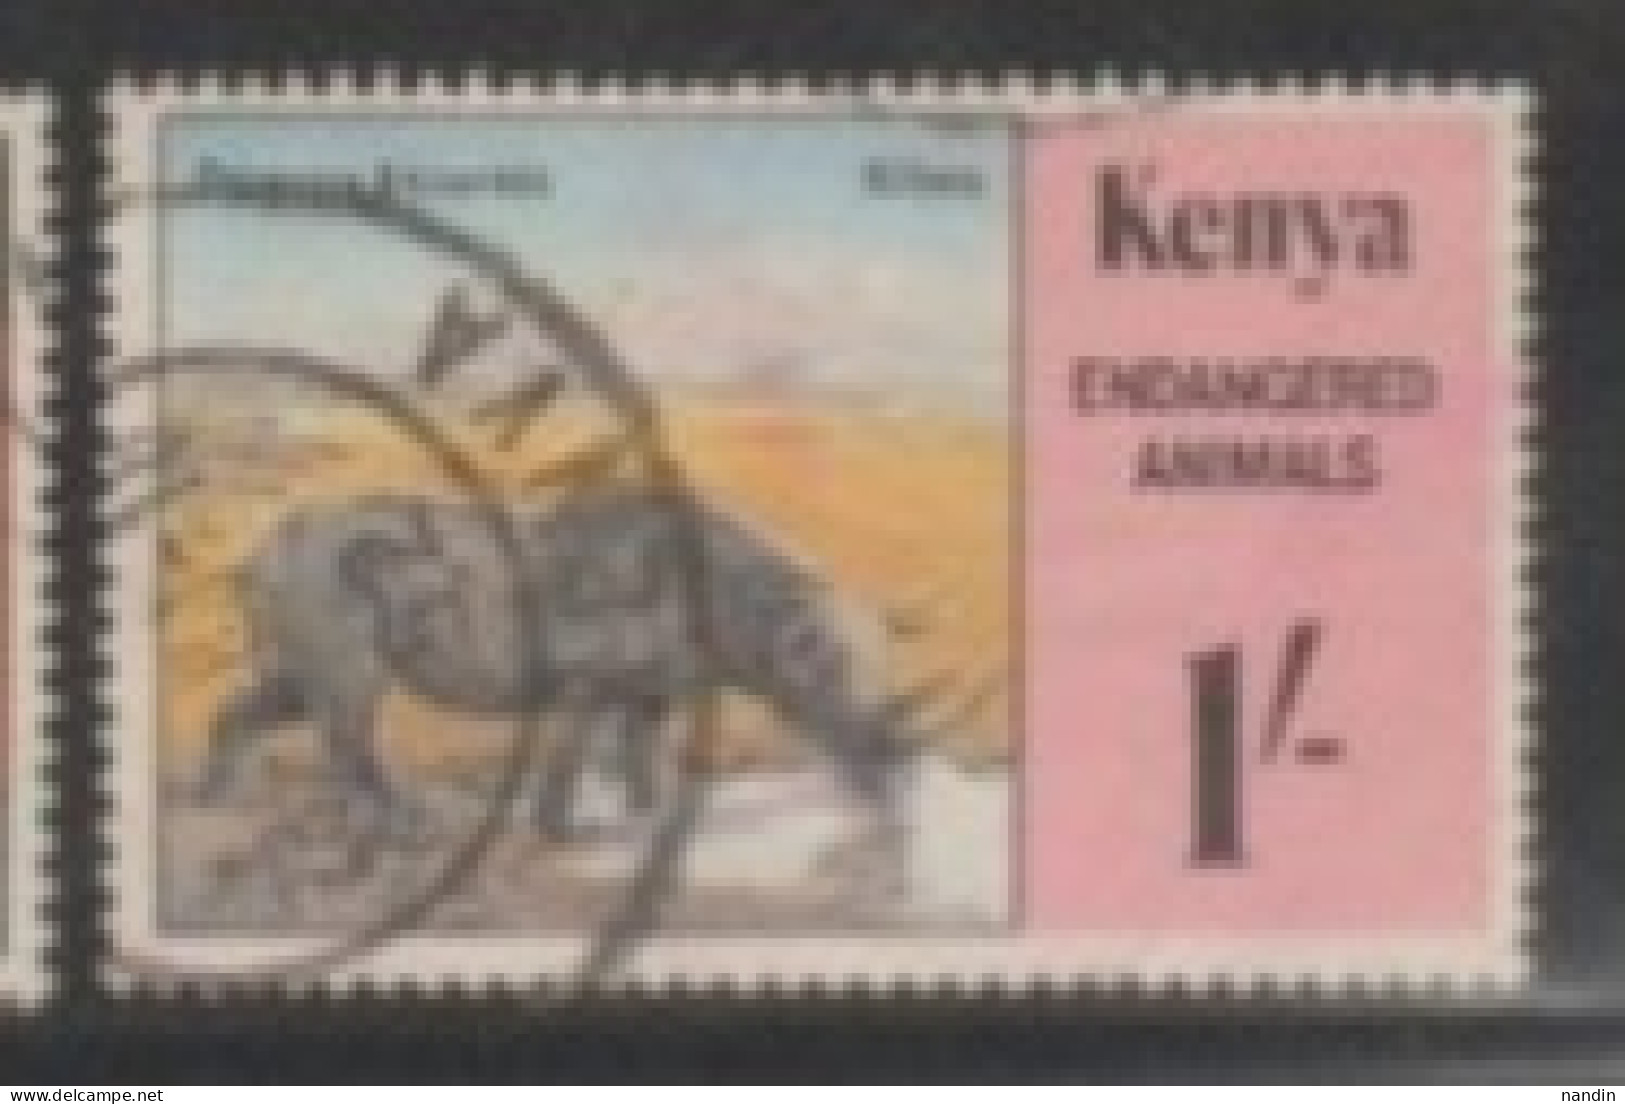 1985 KENYA STAMP USED On Wild Life/Fauna/Mammals/Rhinos/ Diceros Bicornis/ Endangered Specie - Rhinoceros